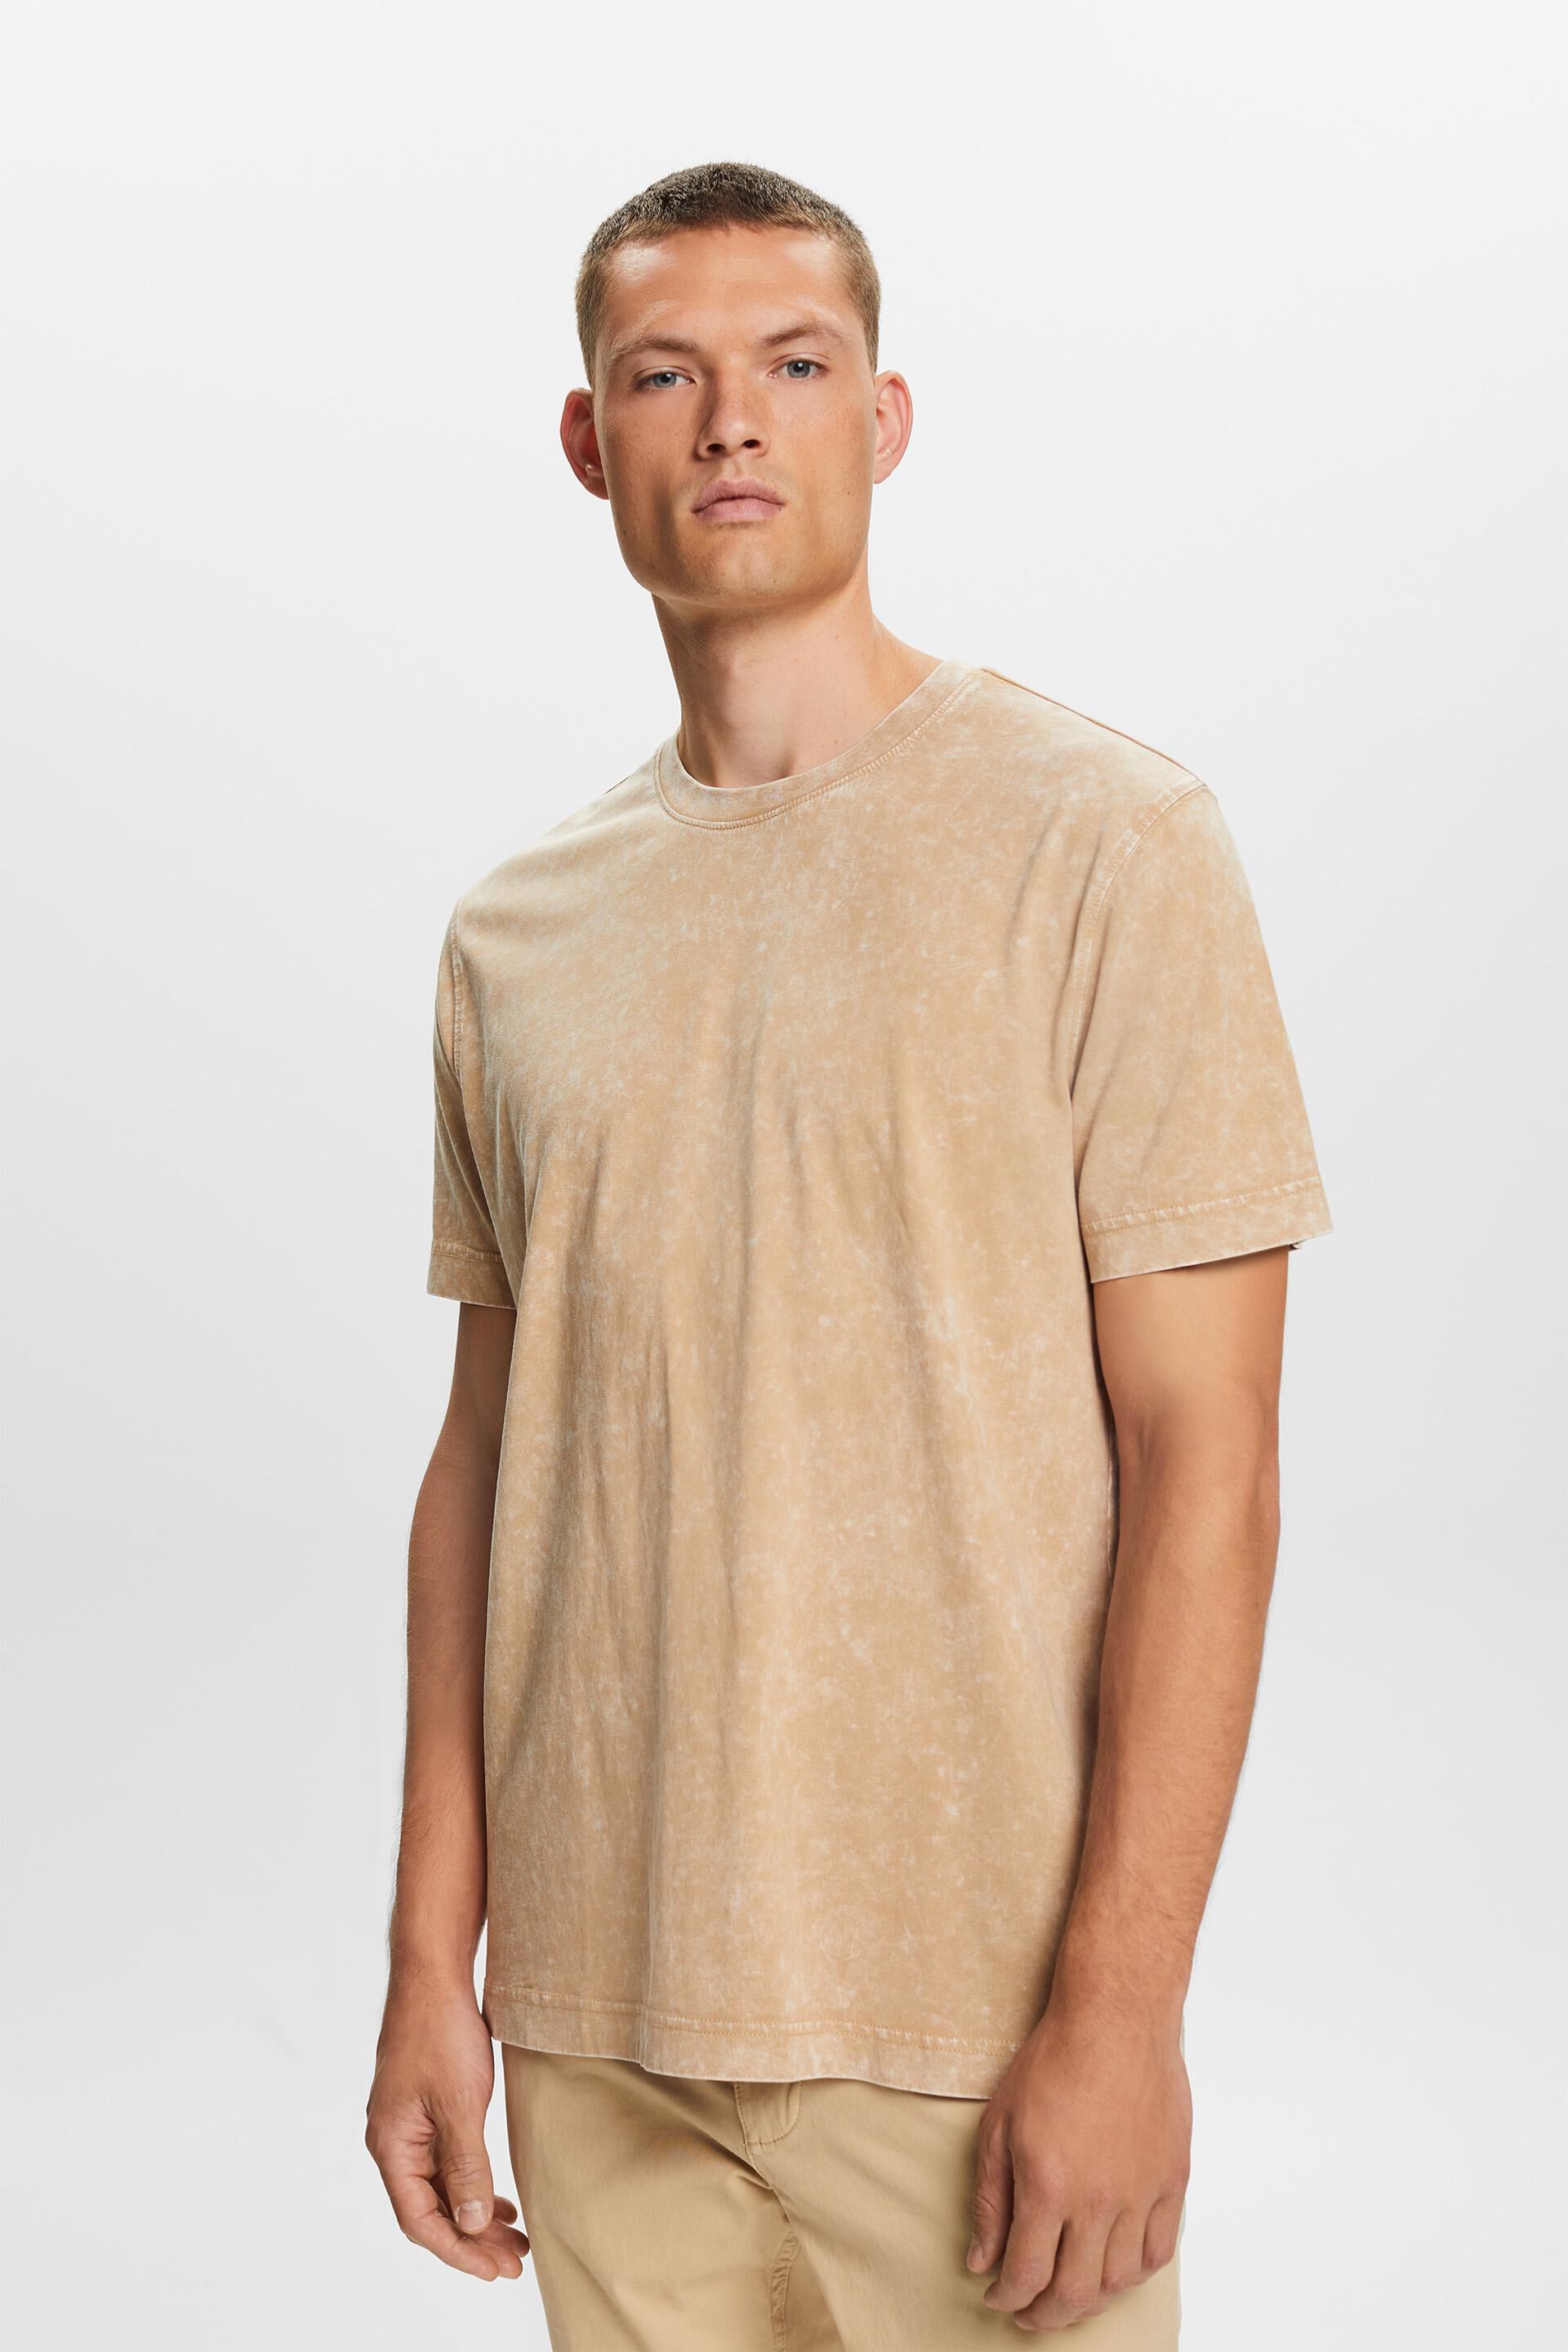 Esprit washed Stone cotton T-shirt, 100%